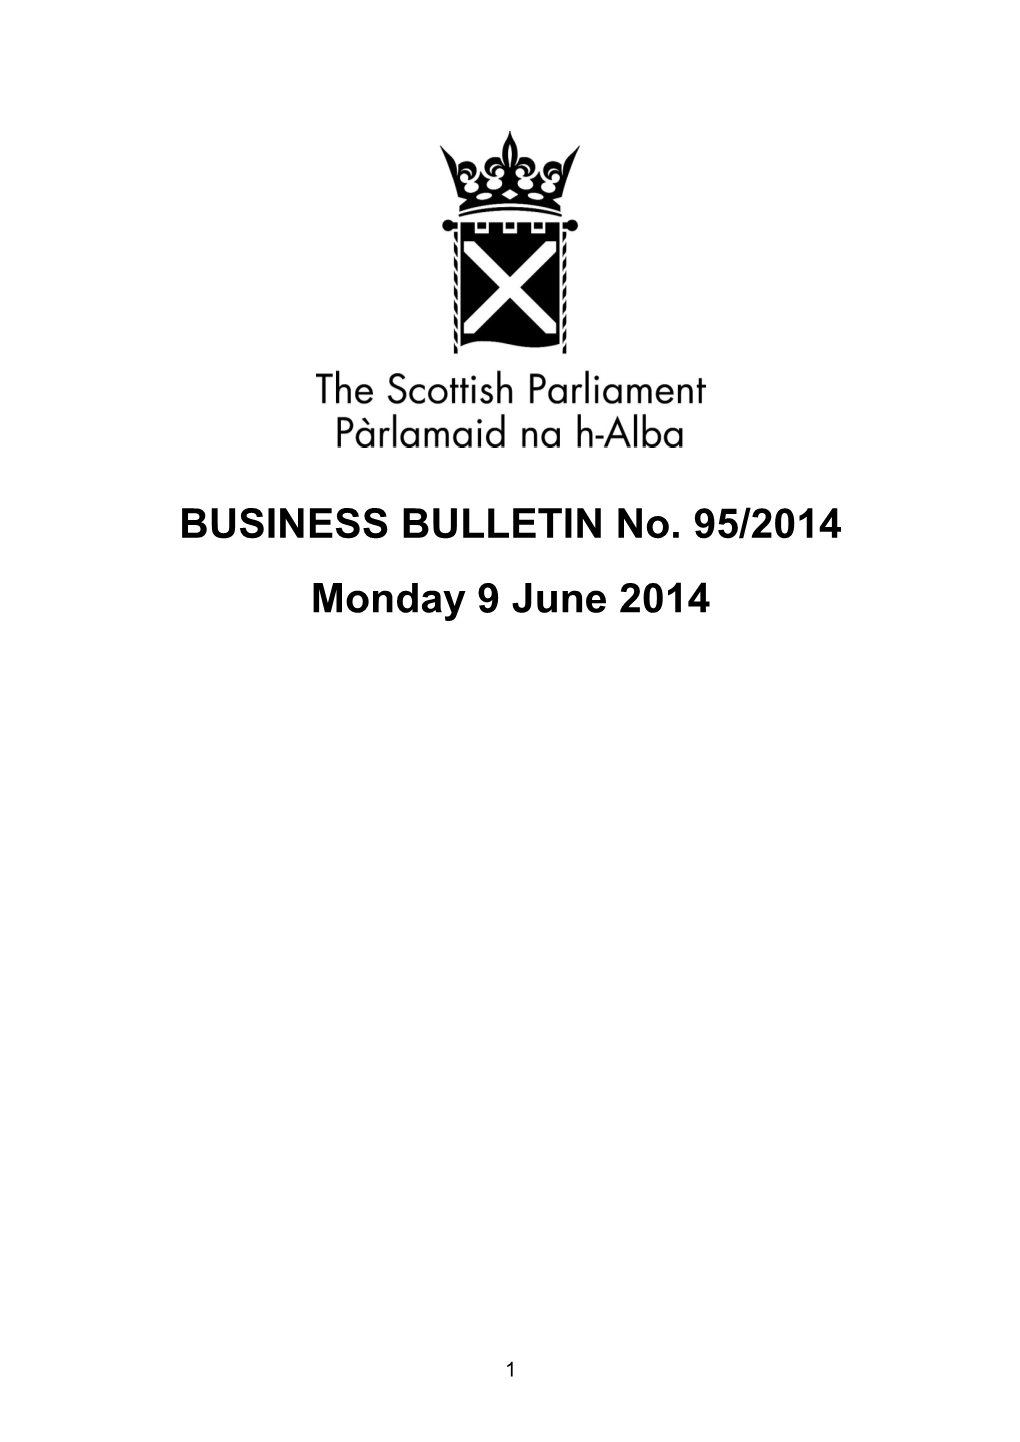 BUSINESS BULLETIN No. 95/2014 Monday 9 June 2014